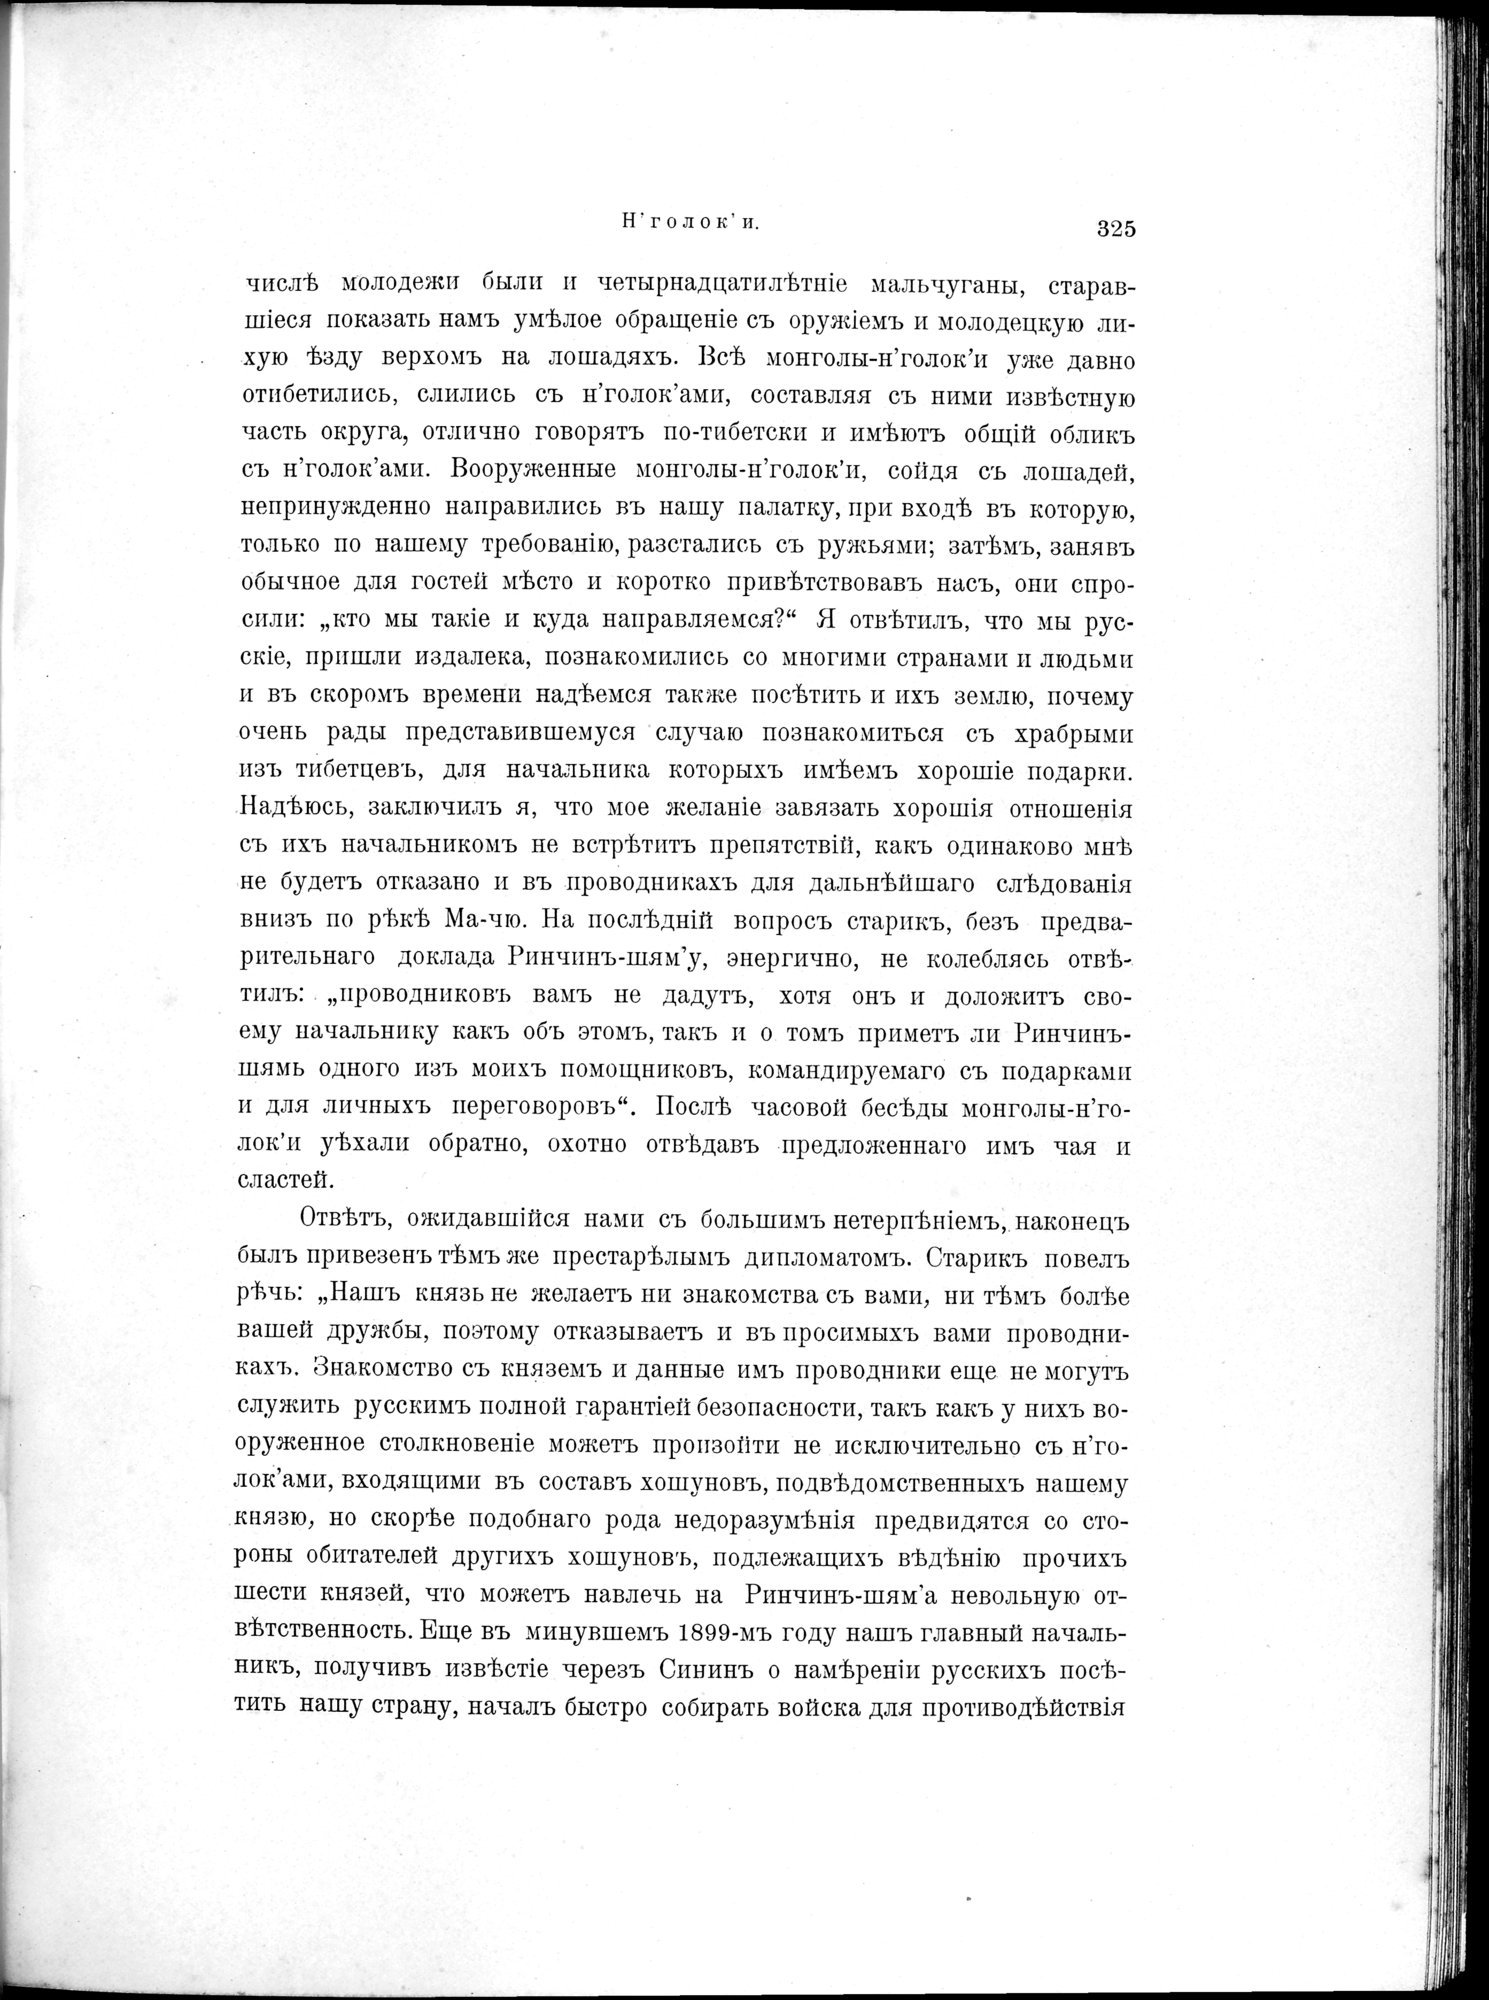 Mongoliia i Kam : vol.2 / Page 95 (Grayscale High Resolution Image)